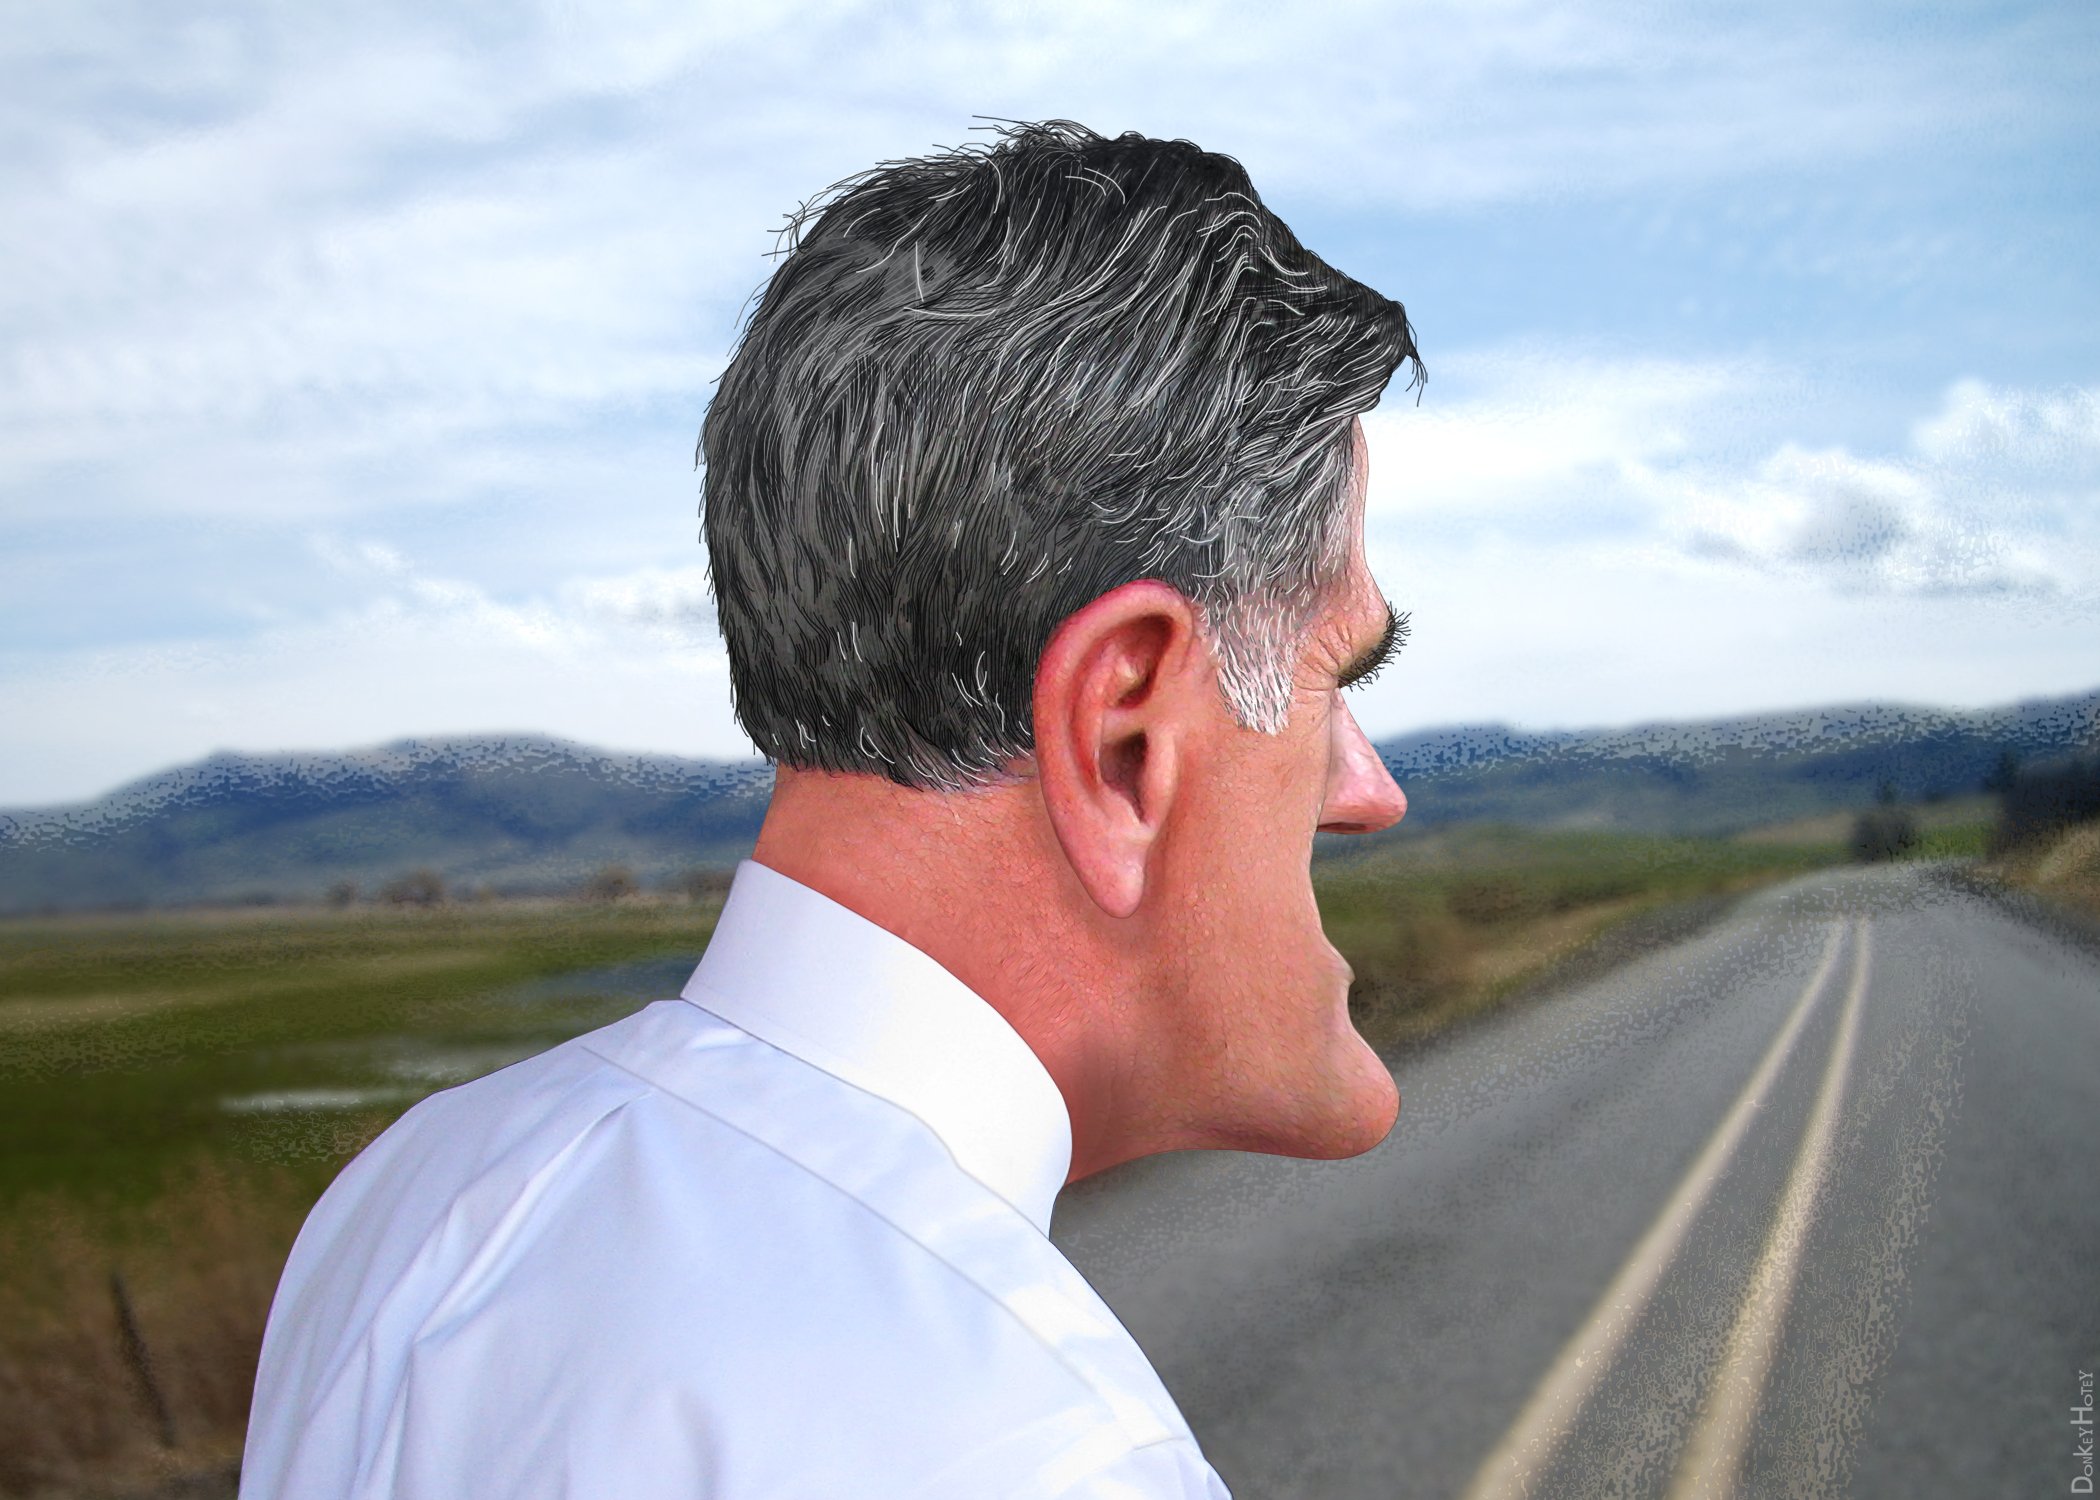 Mitt_Romney_Looking_Down_Road_2100x1500.jpg